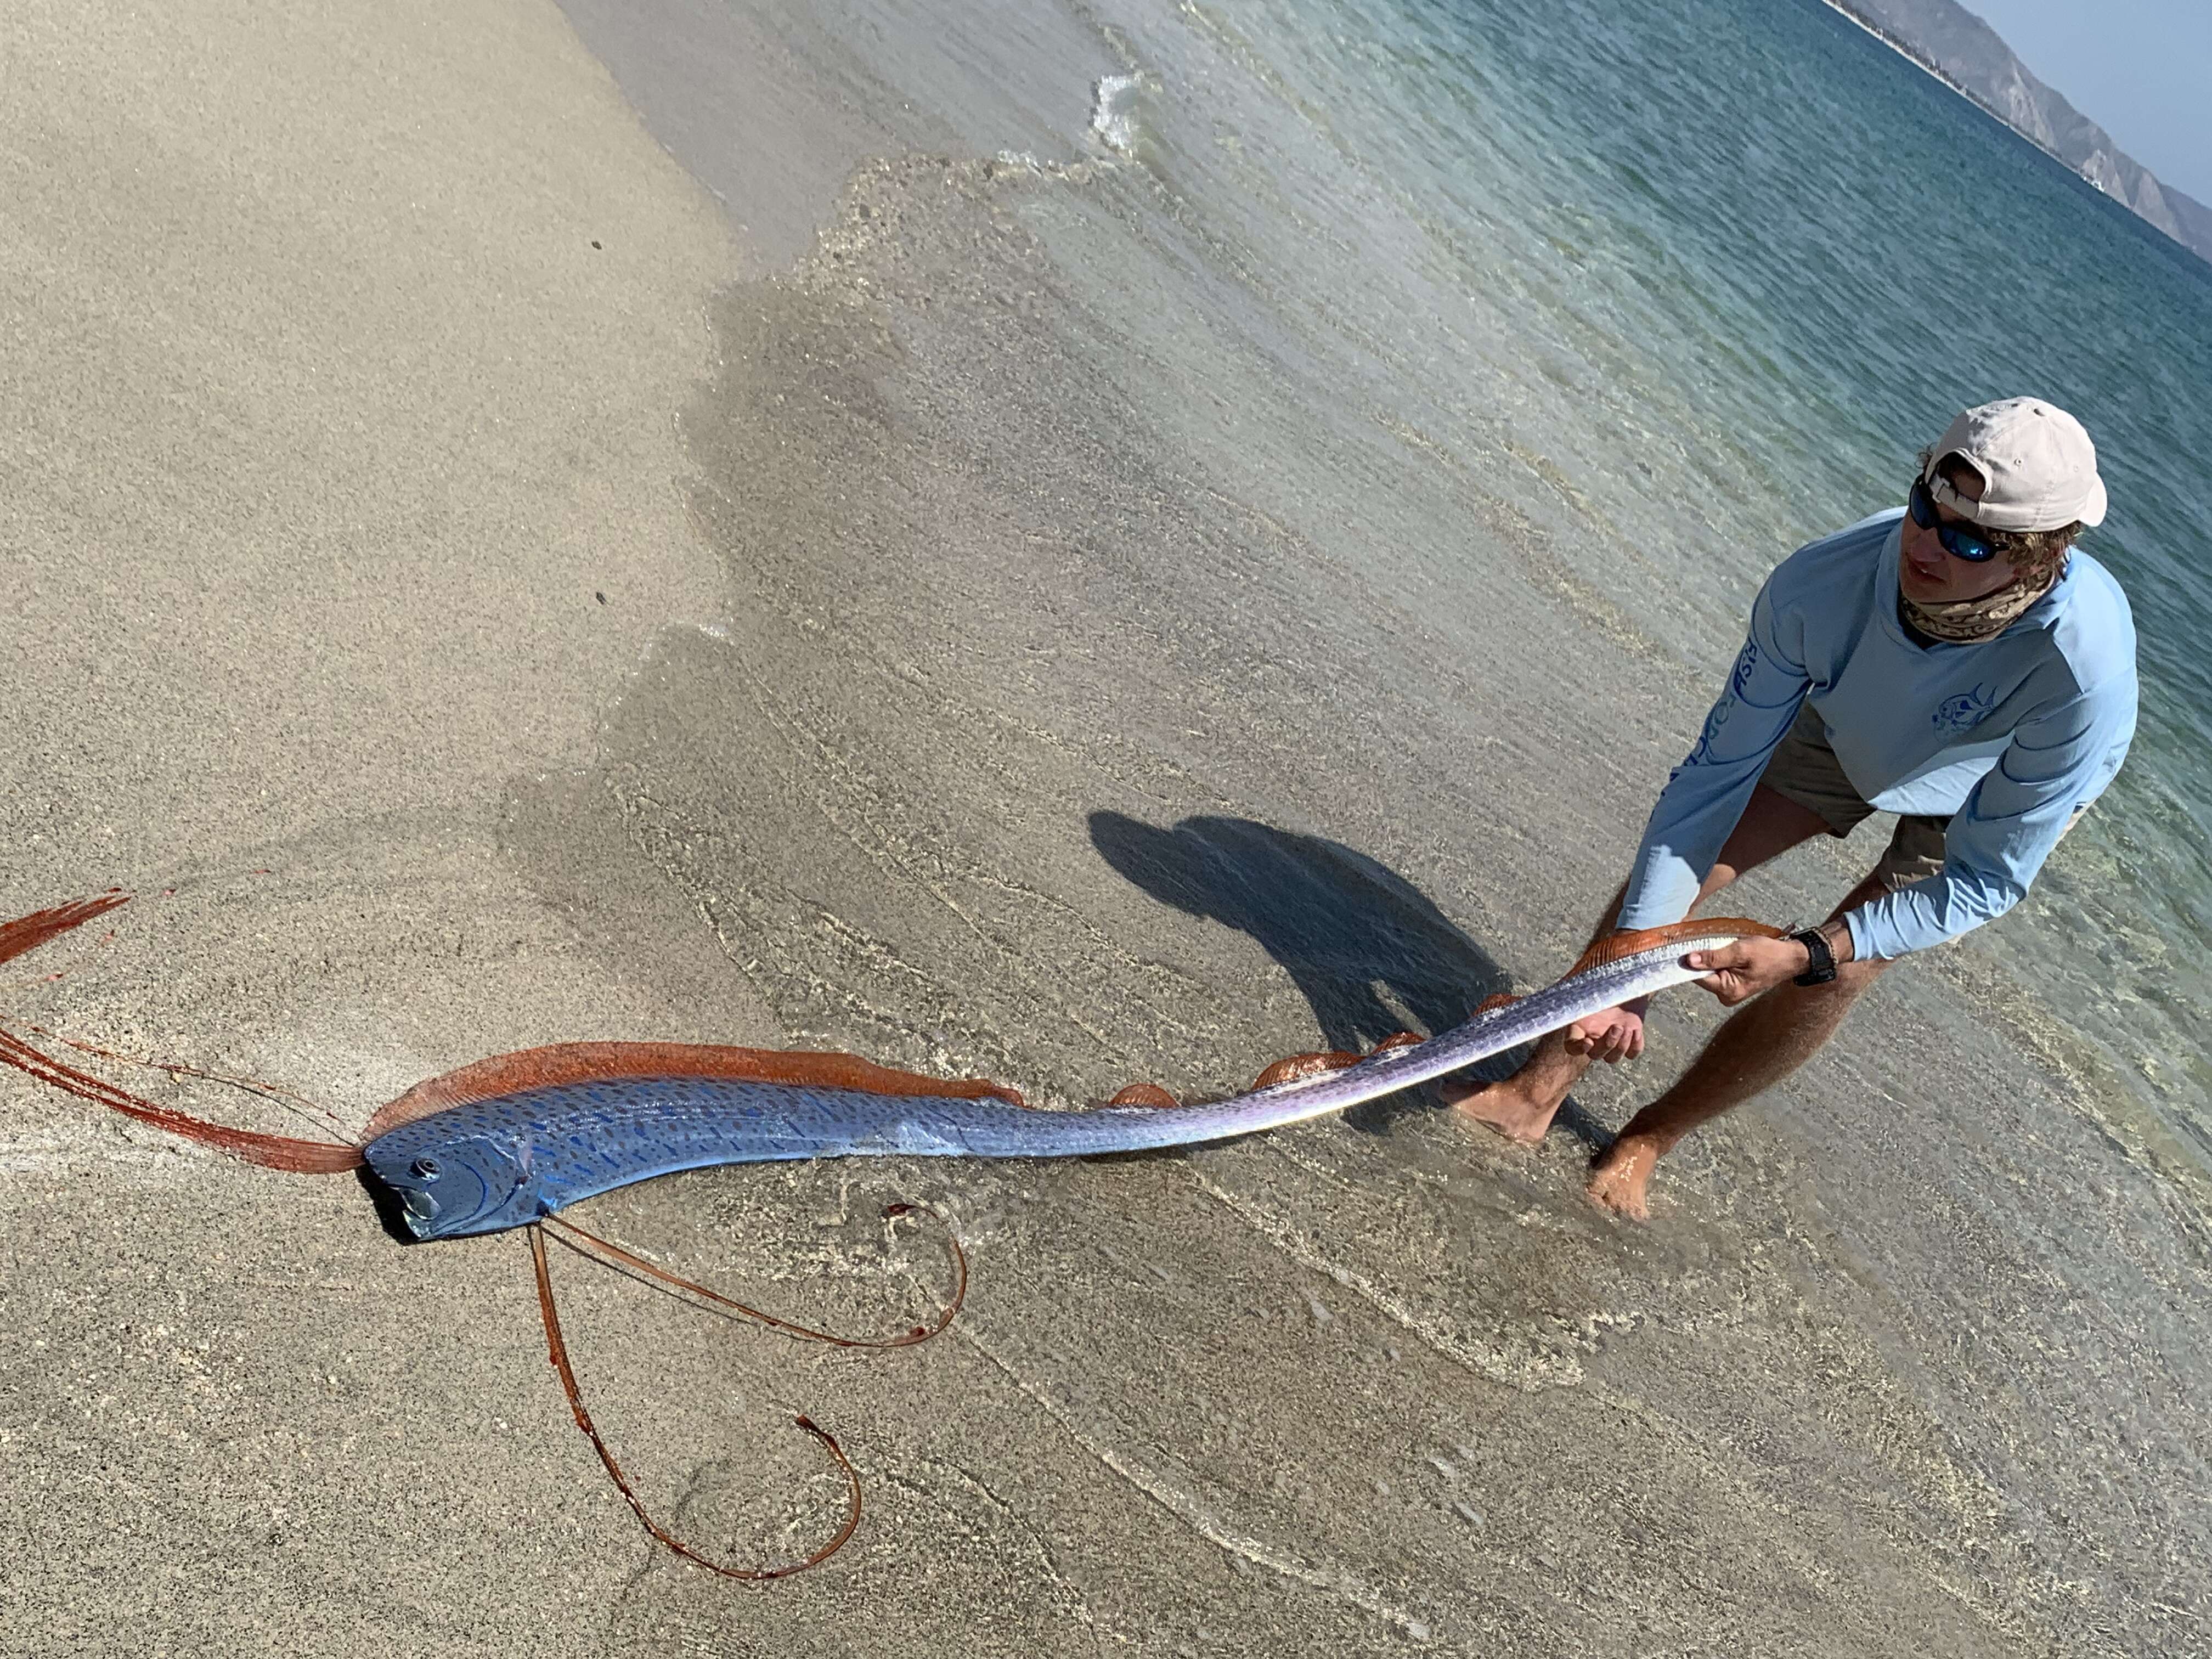 Fishermen find oarfish on Mexico beach